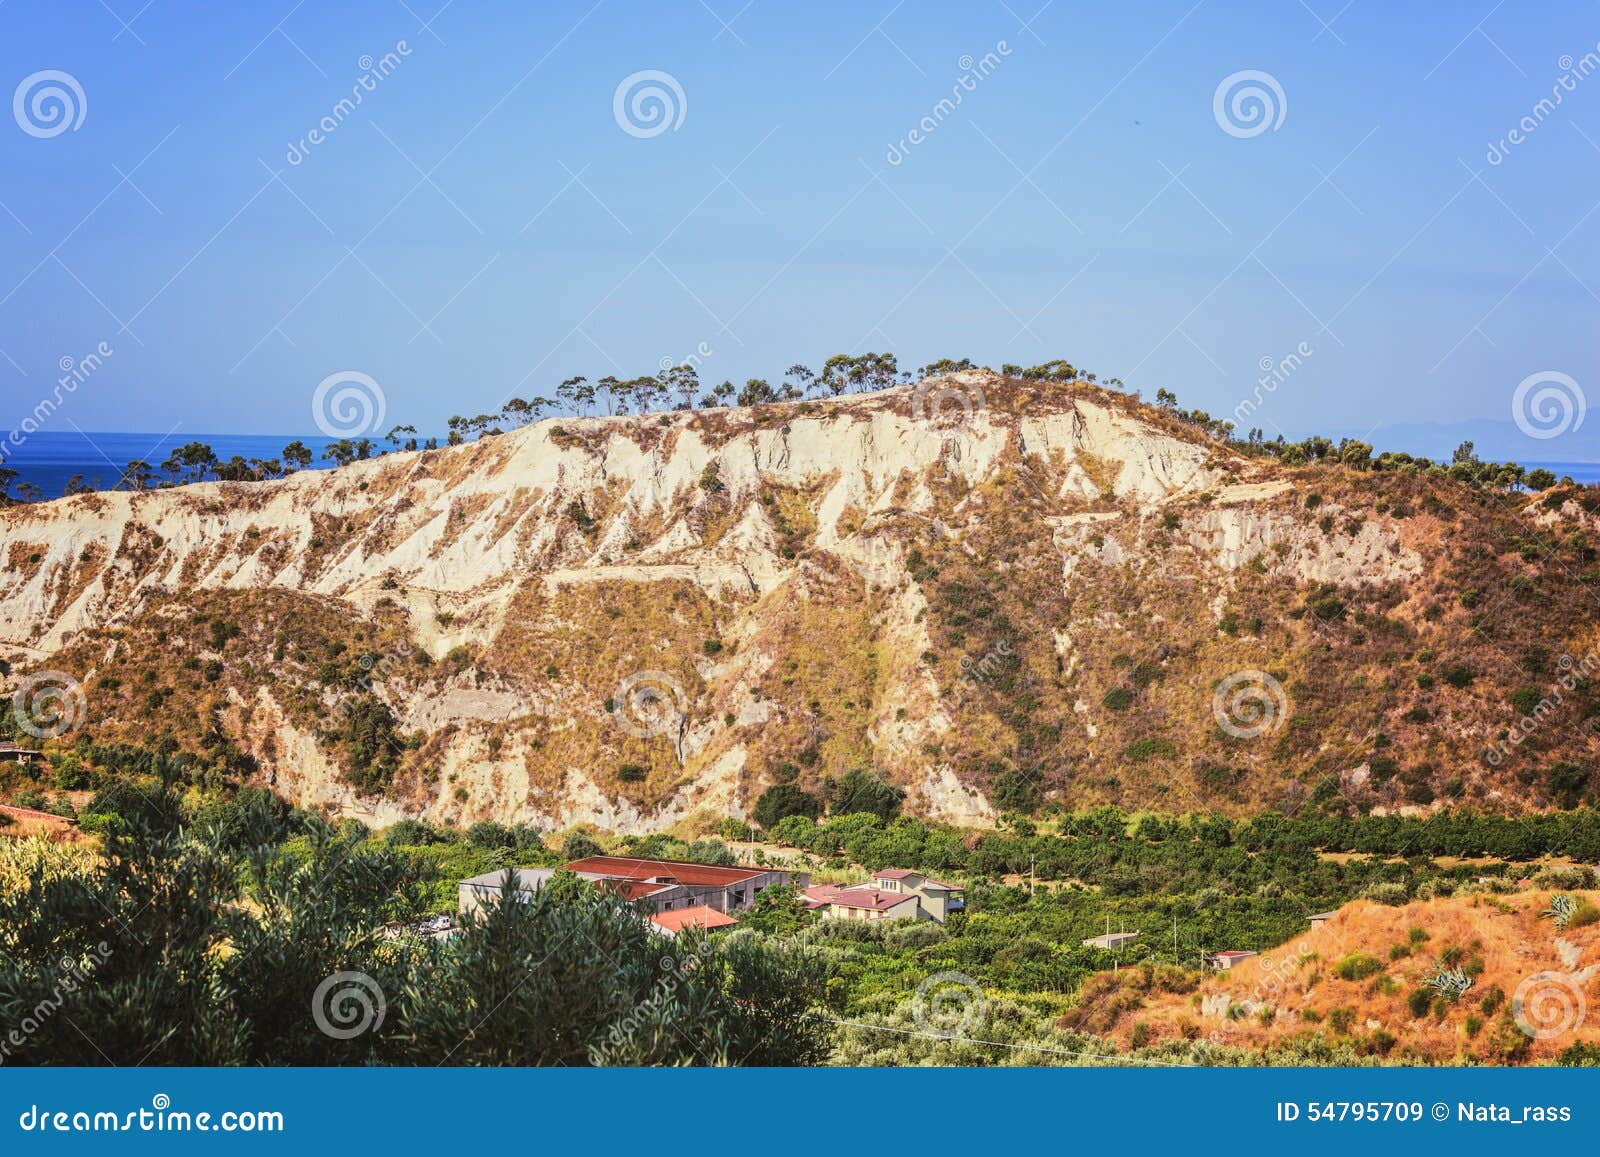 Landscape Of Calabria Stock Image Image Of Landscape 54795709